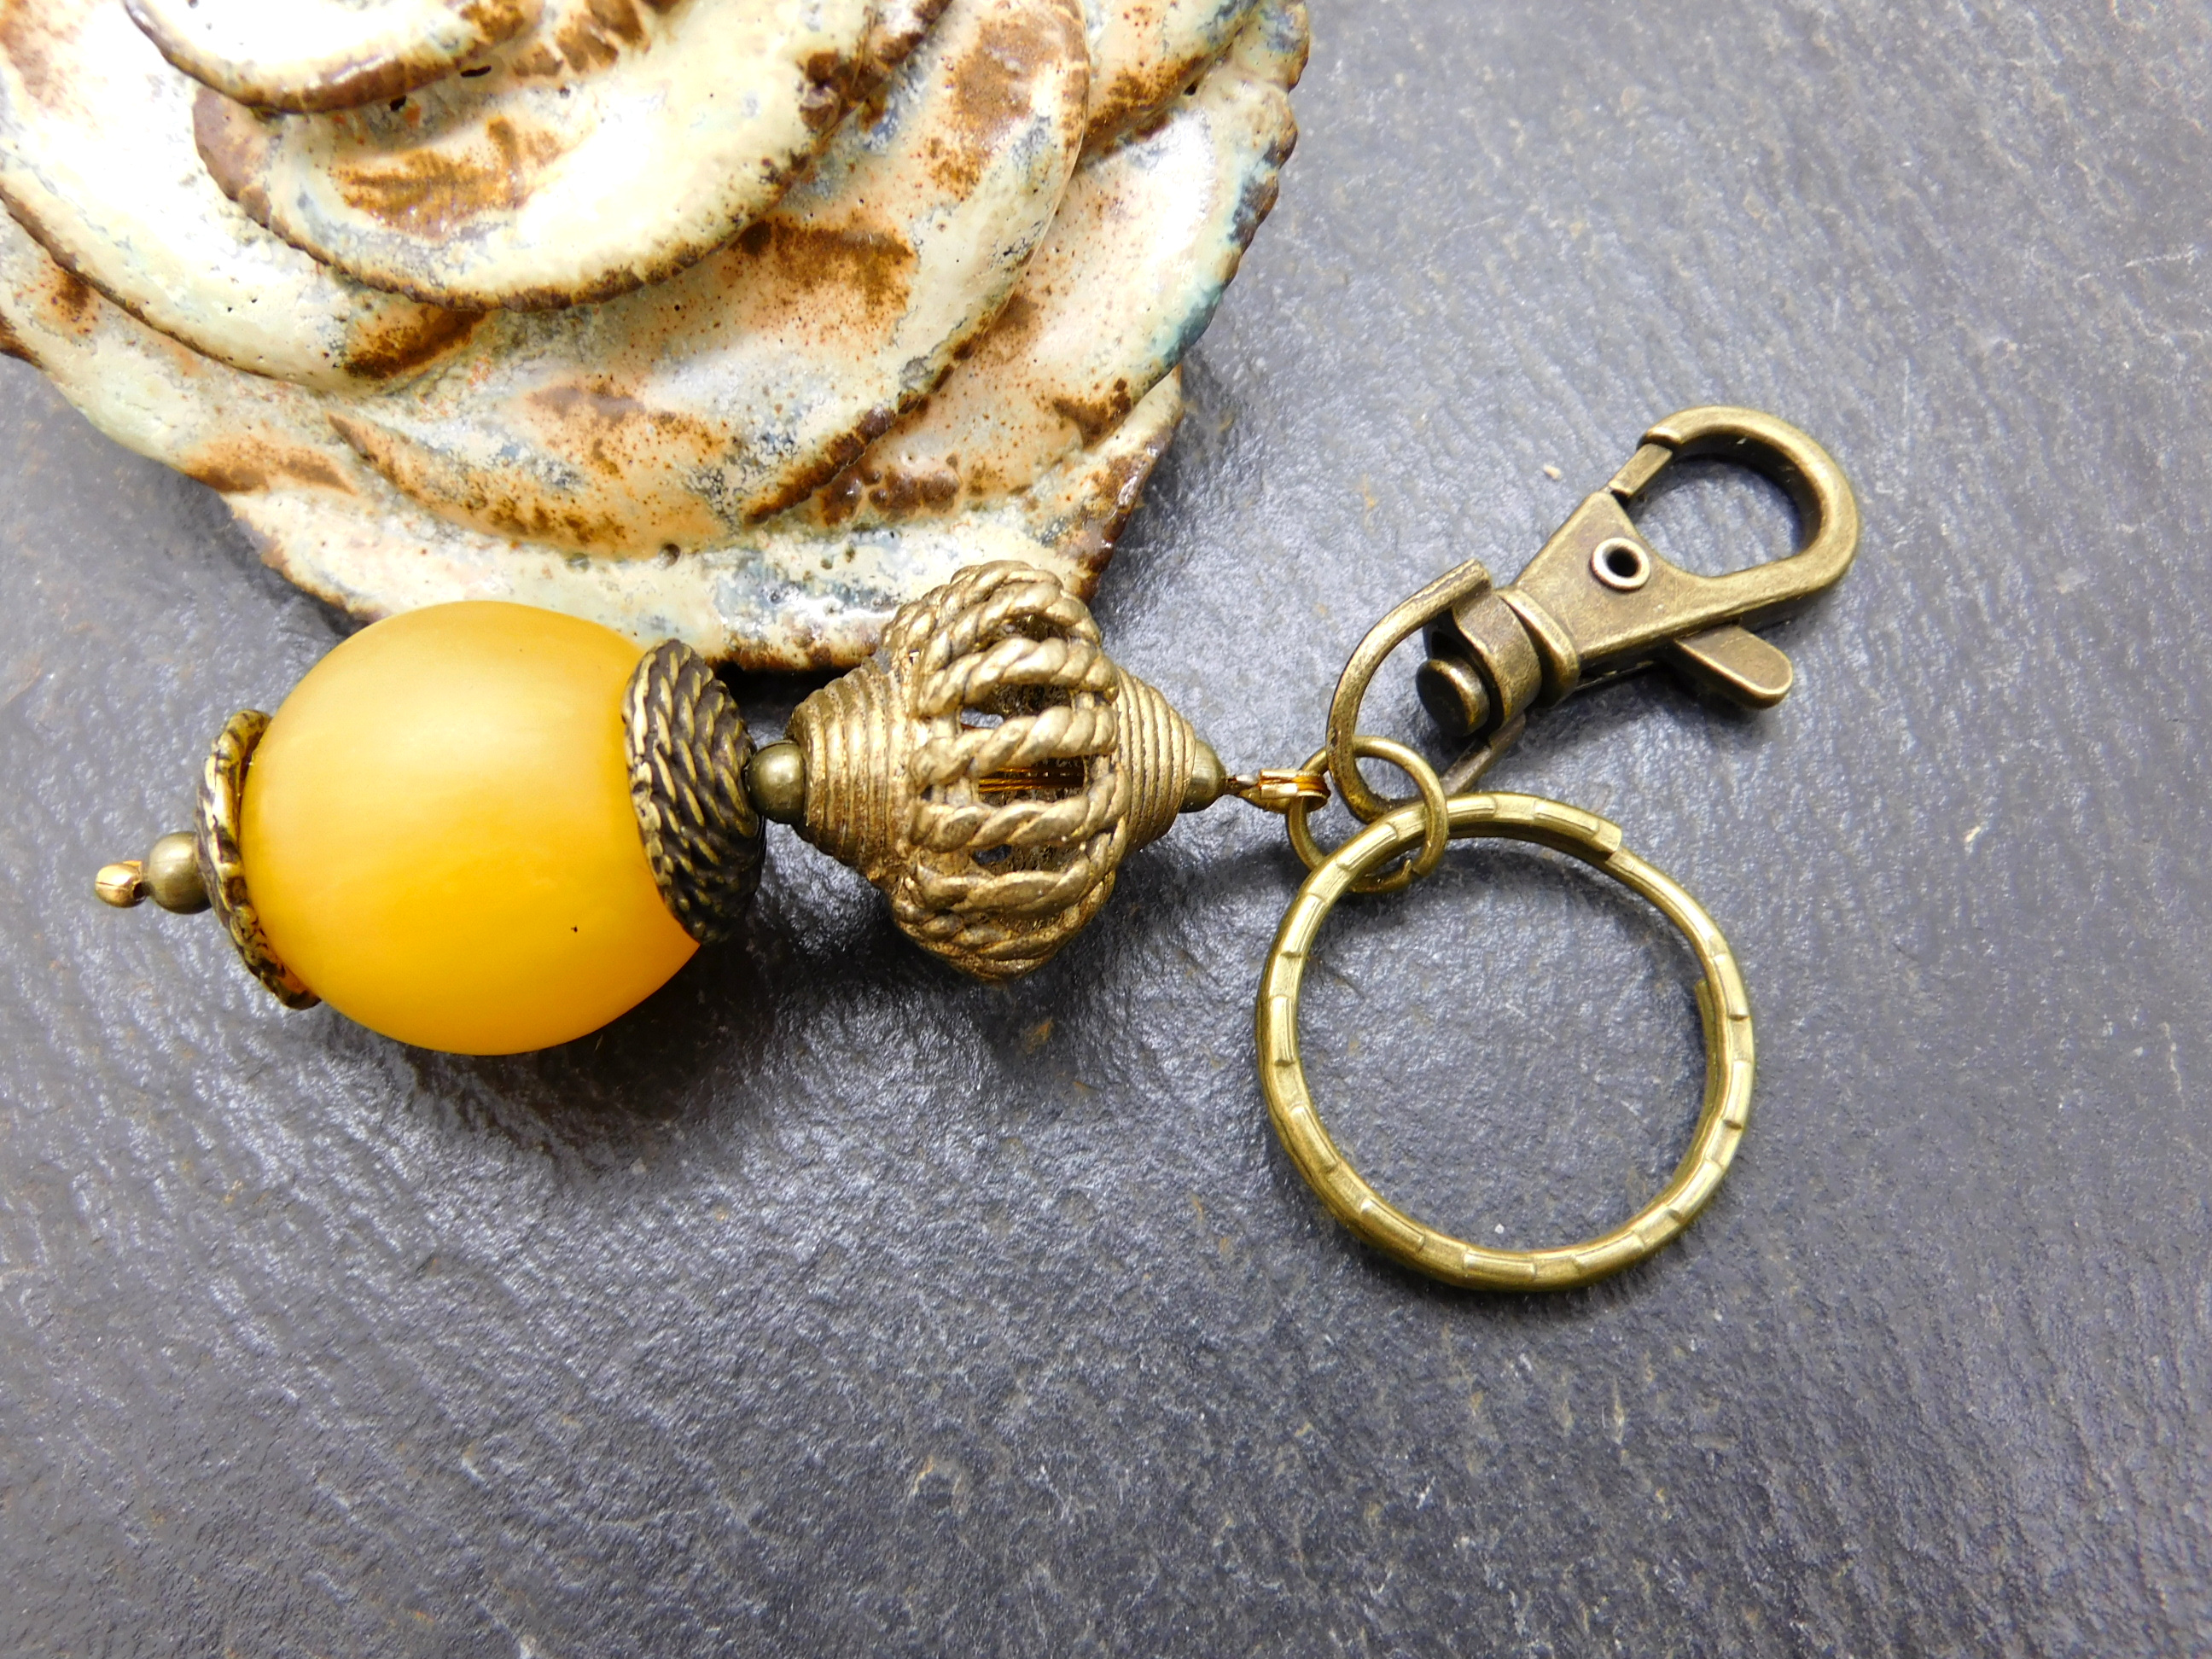 keychain / bag charm with resin amber bead and handmade brass bead